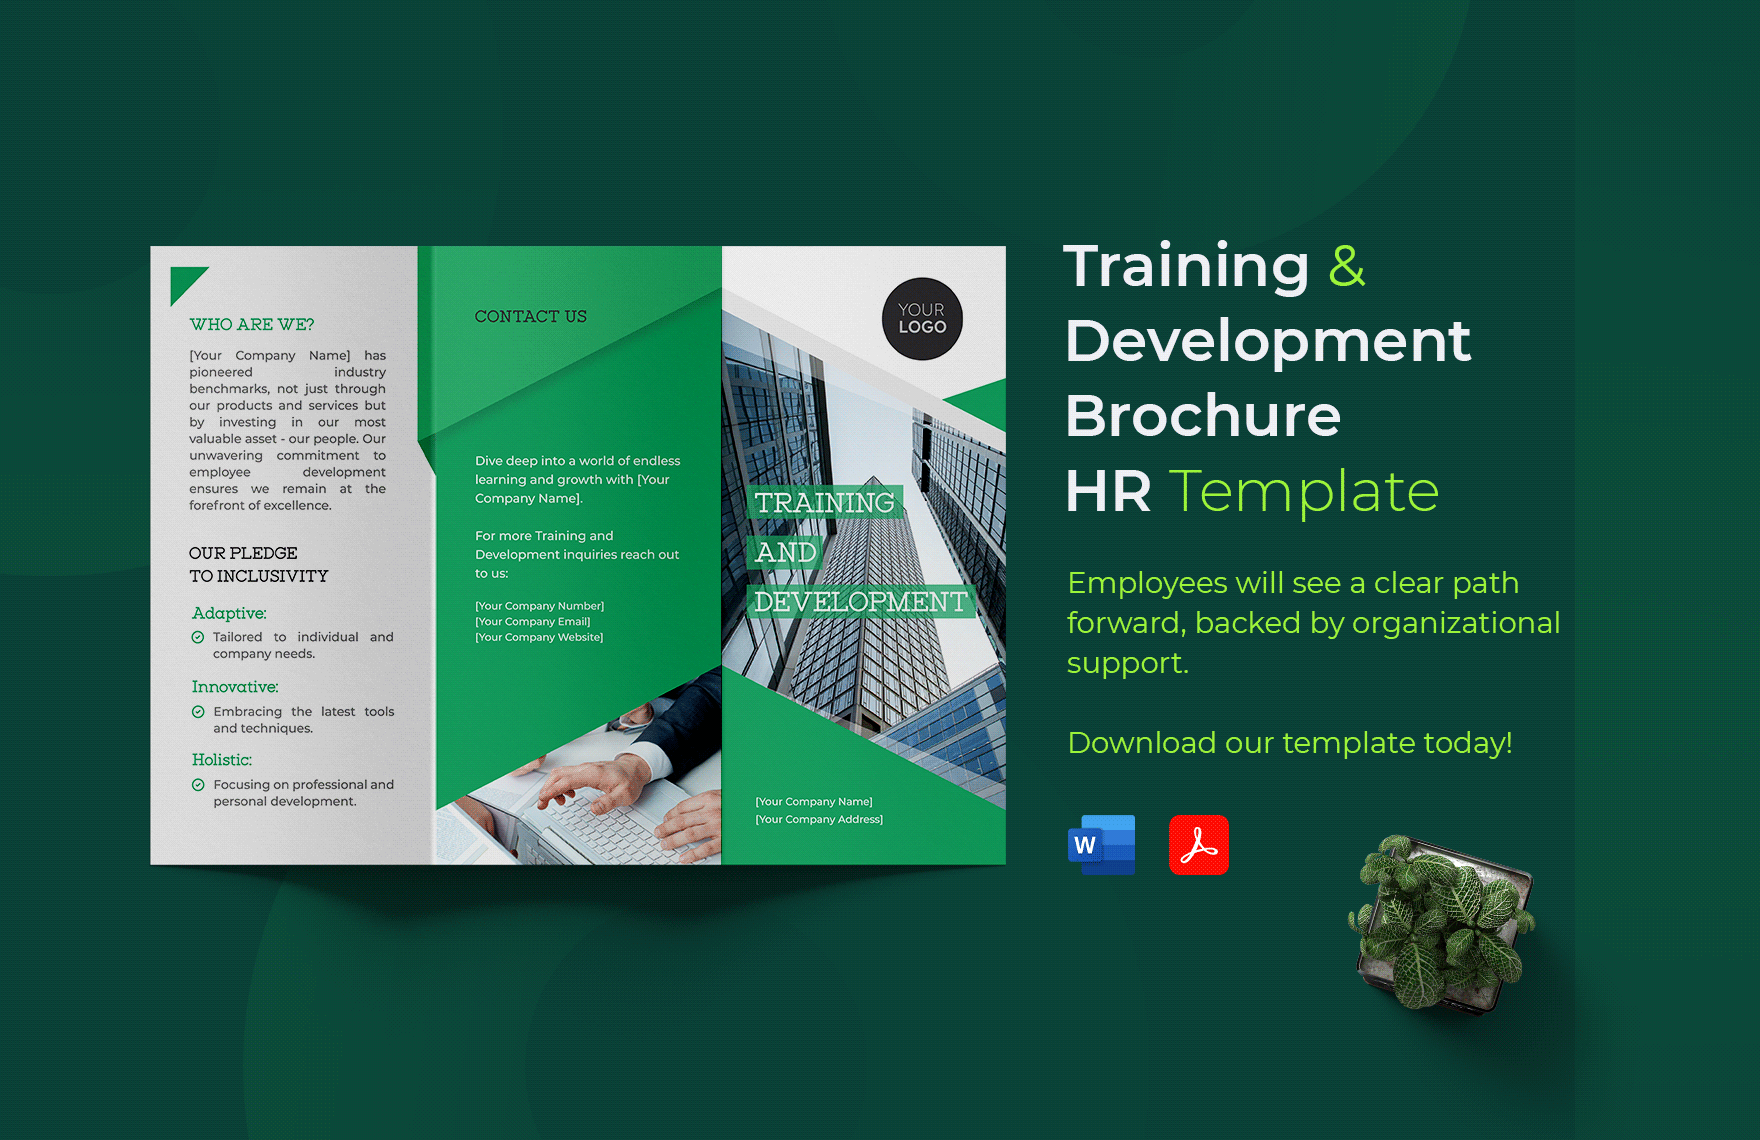 Training and Development Brochure HR Template